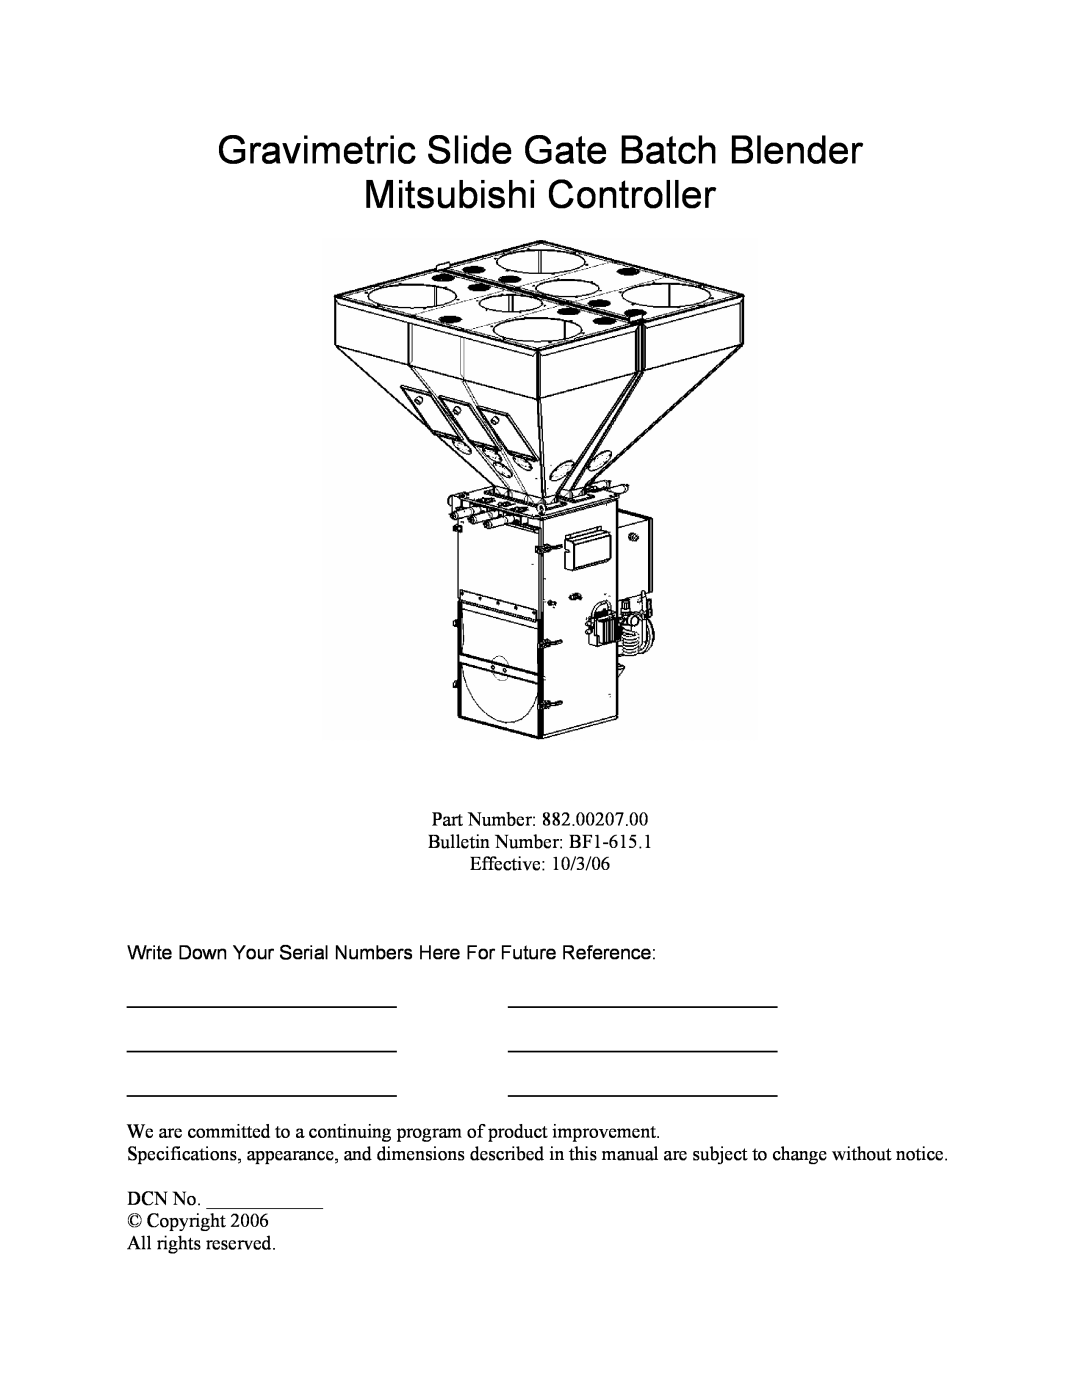 Mitsubishi Electronics 882.00207.00 specifications Gravimetric Slide Gate Batch Blender, Mitsubishi Controller 